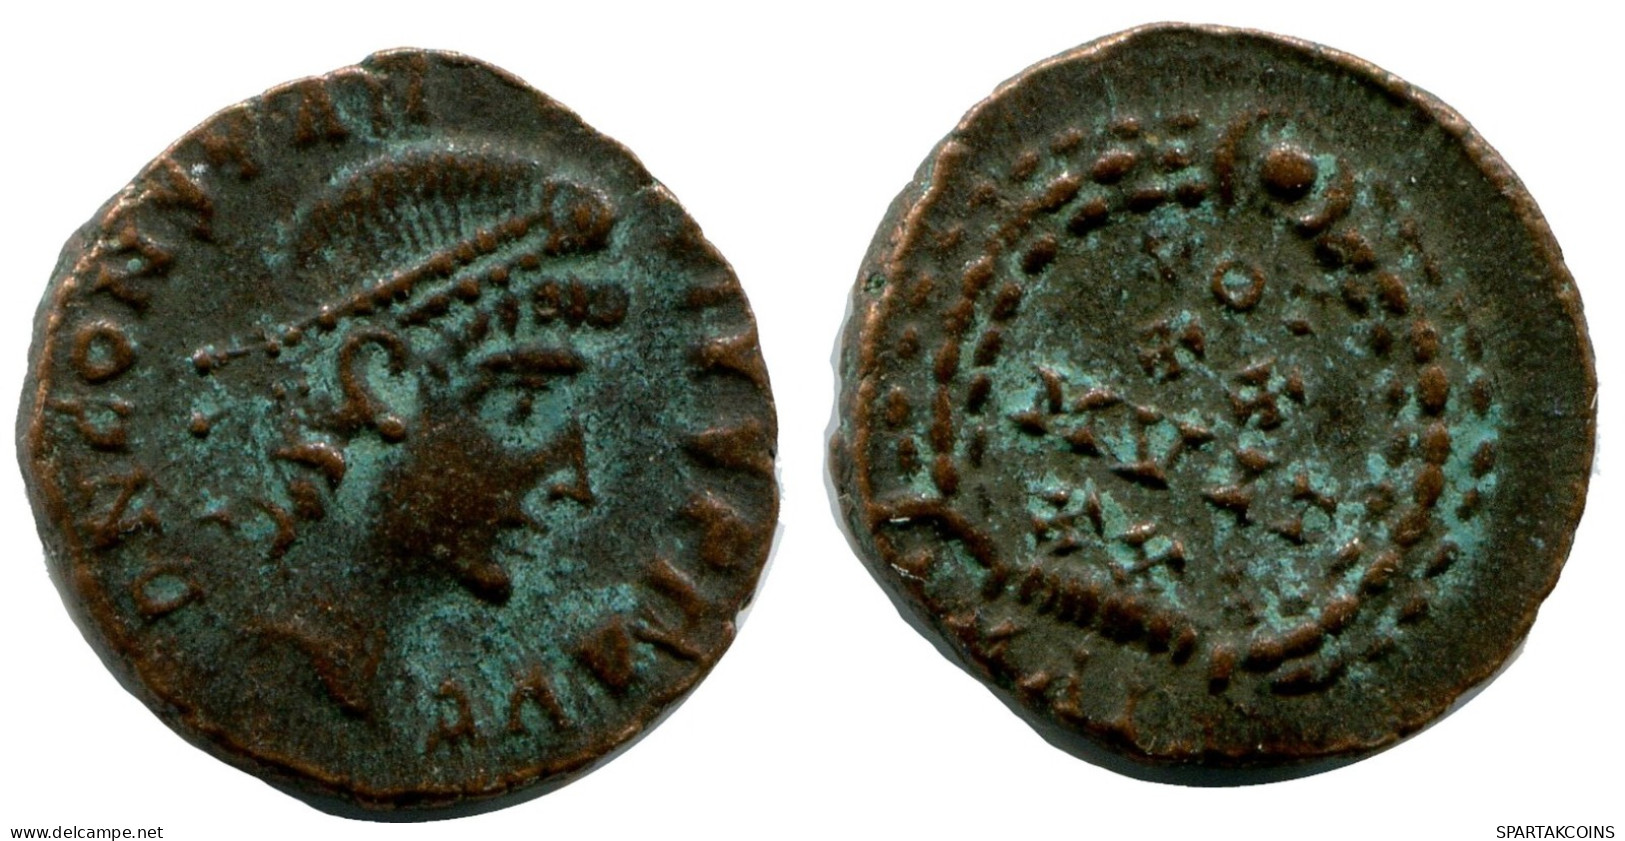 CONSTANTIUS II MINTED IN ALEKSANDRIA FOUND IN IHNASYAH HOARD #ANC10249.14.E.A - The Christian Empire (307 AD To 363 AD)